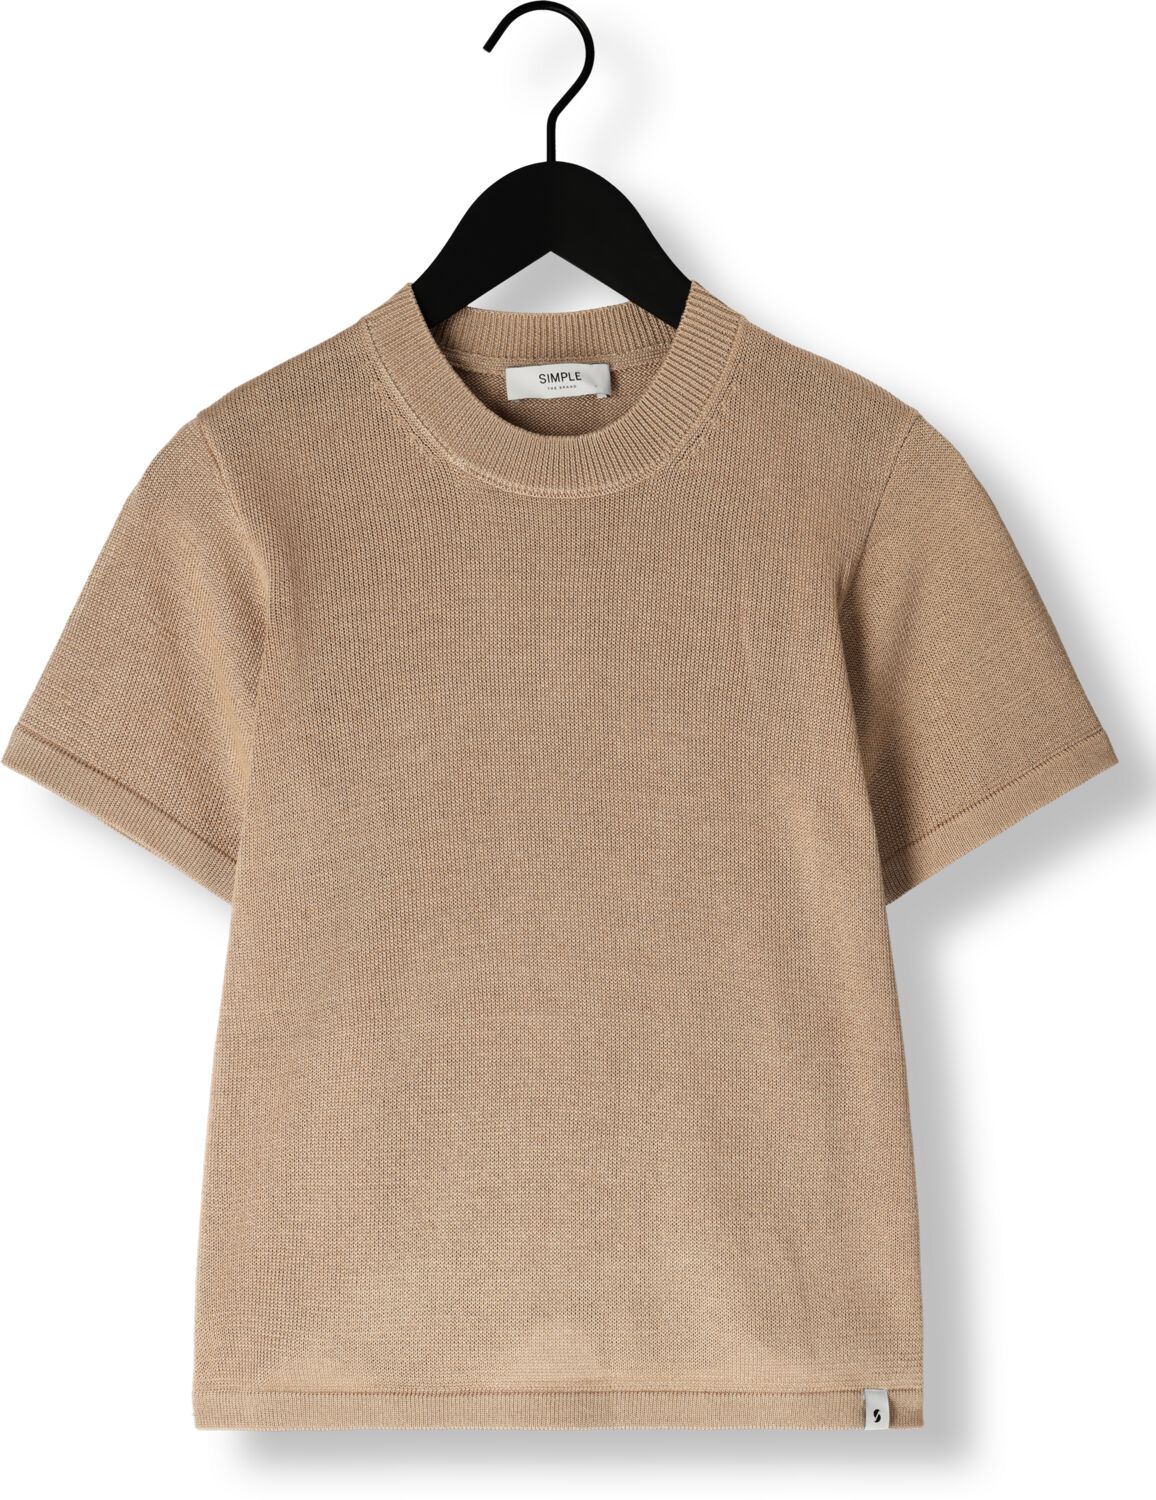 SIMPLE Dames Tops & T-shirts Knit-vis-pl-lux-24-1 Zand